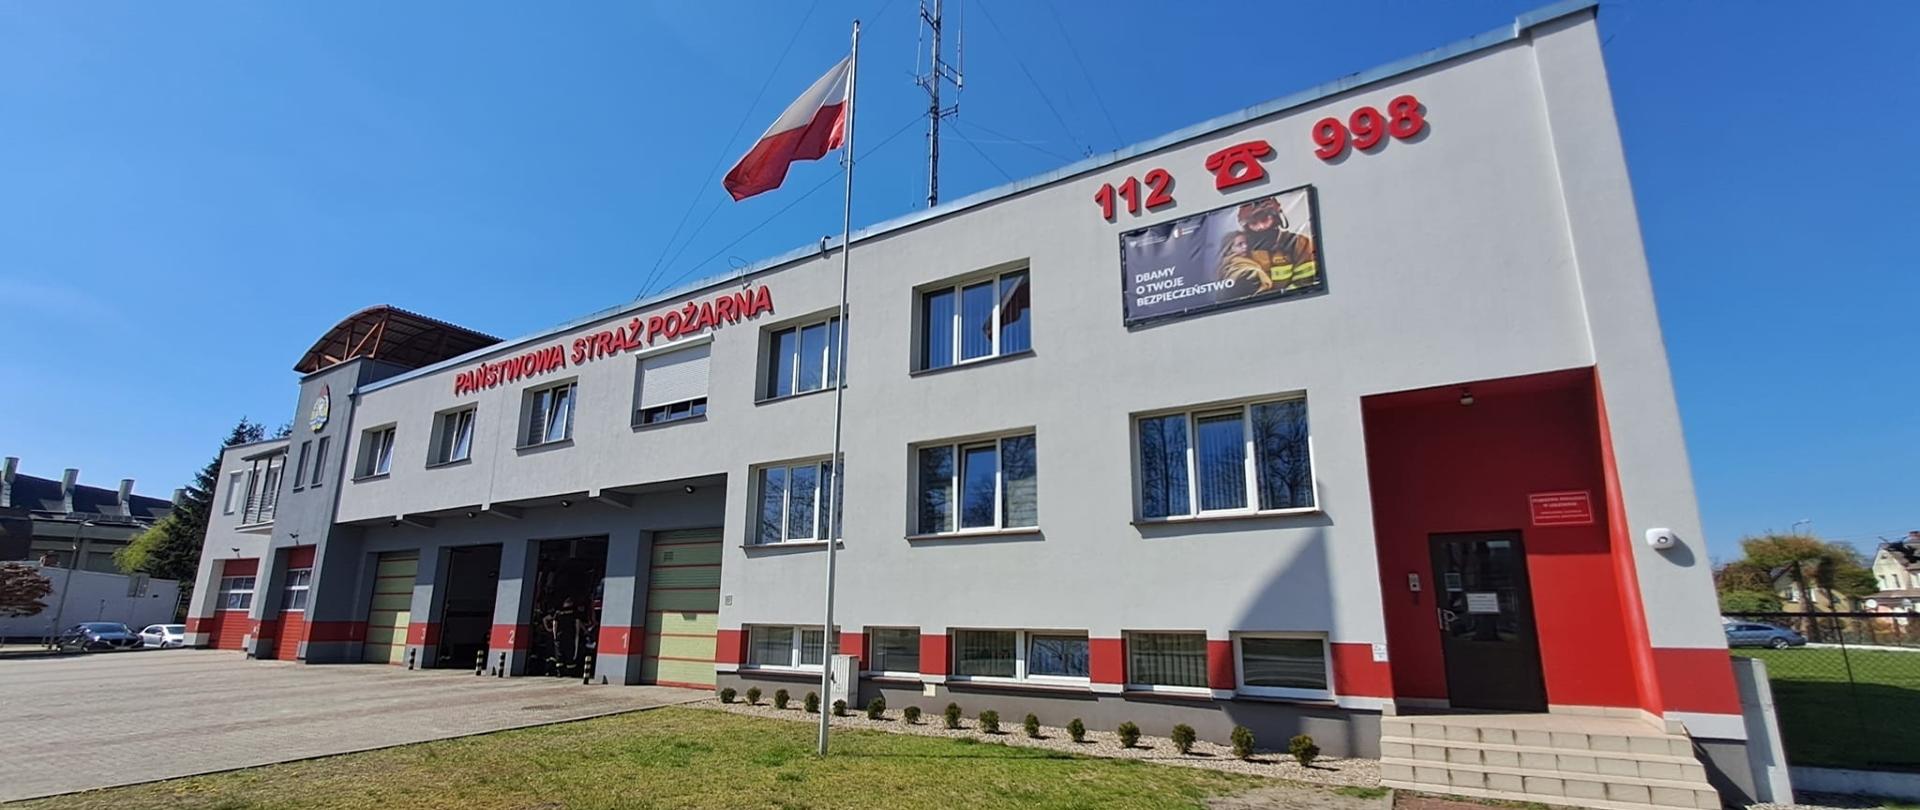 Baner promujące służby podległe MSWiA na budynku KP PSP Goleniów